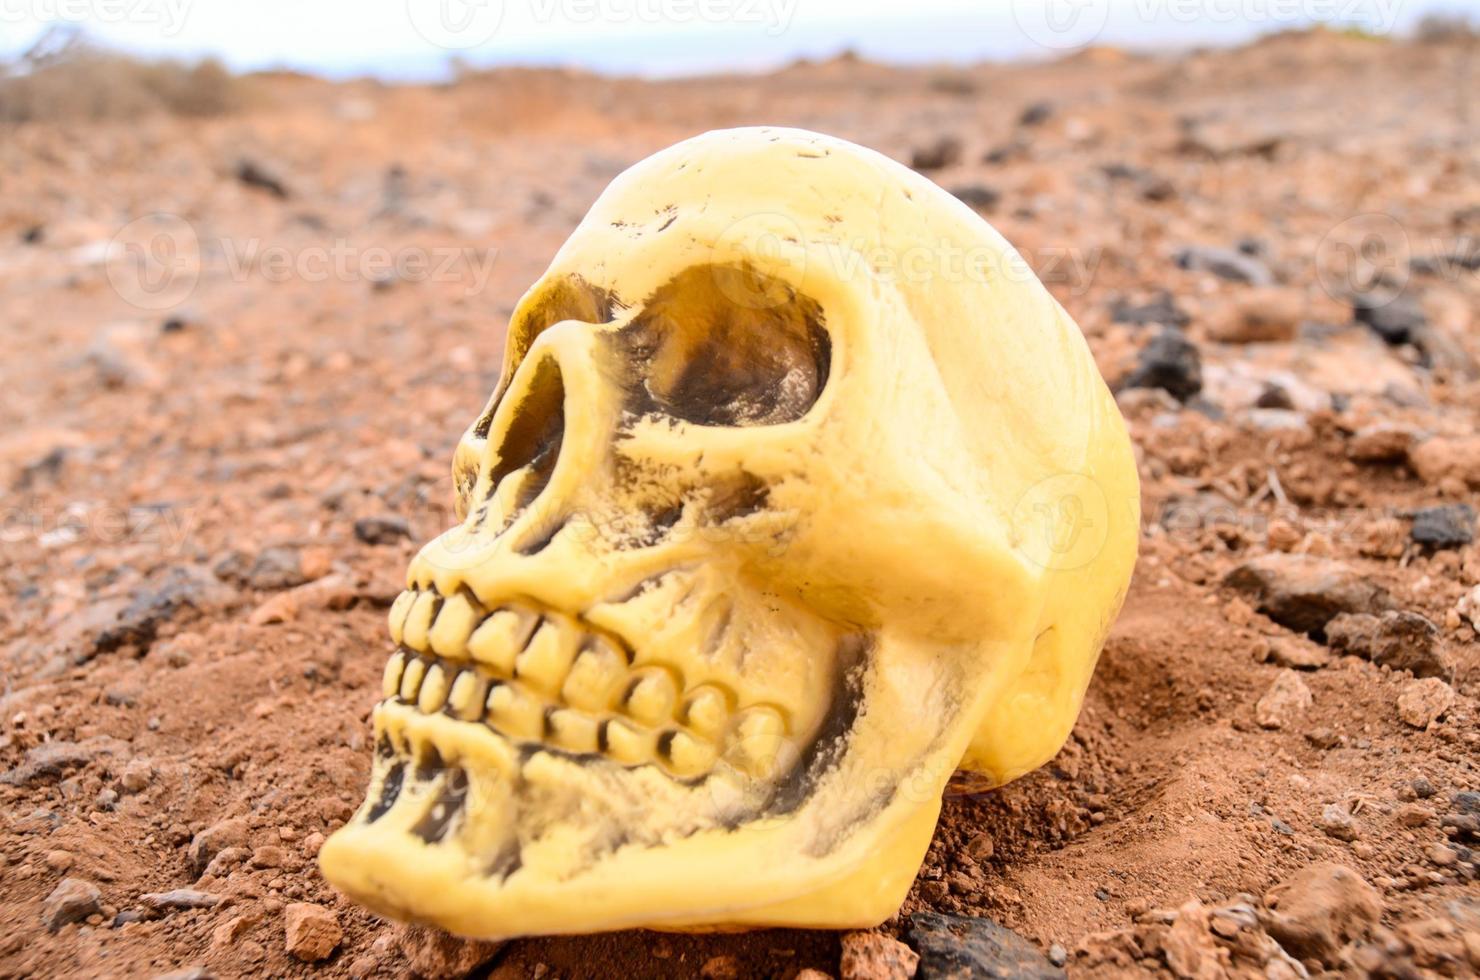 Abandoned Human Skull photo